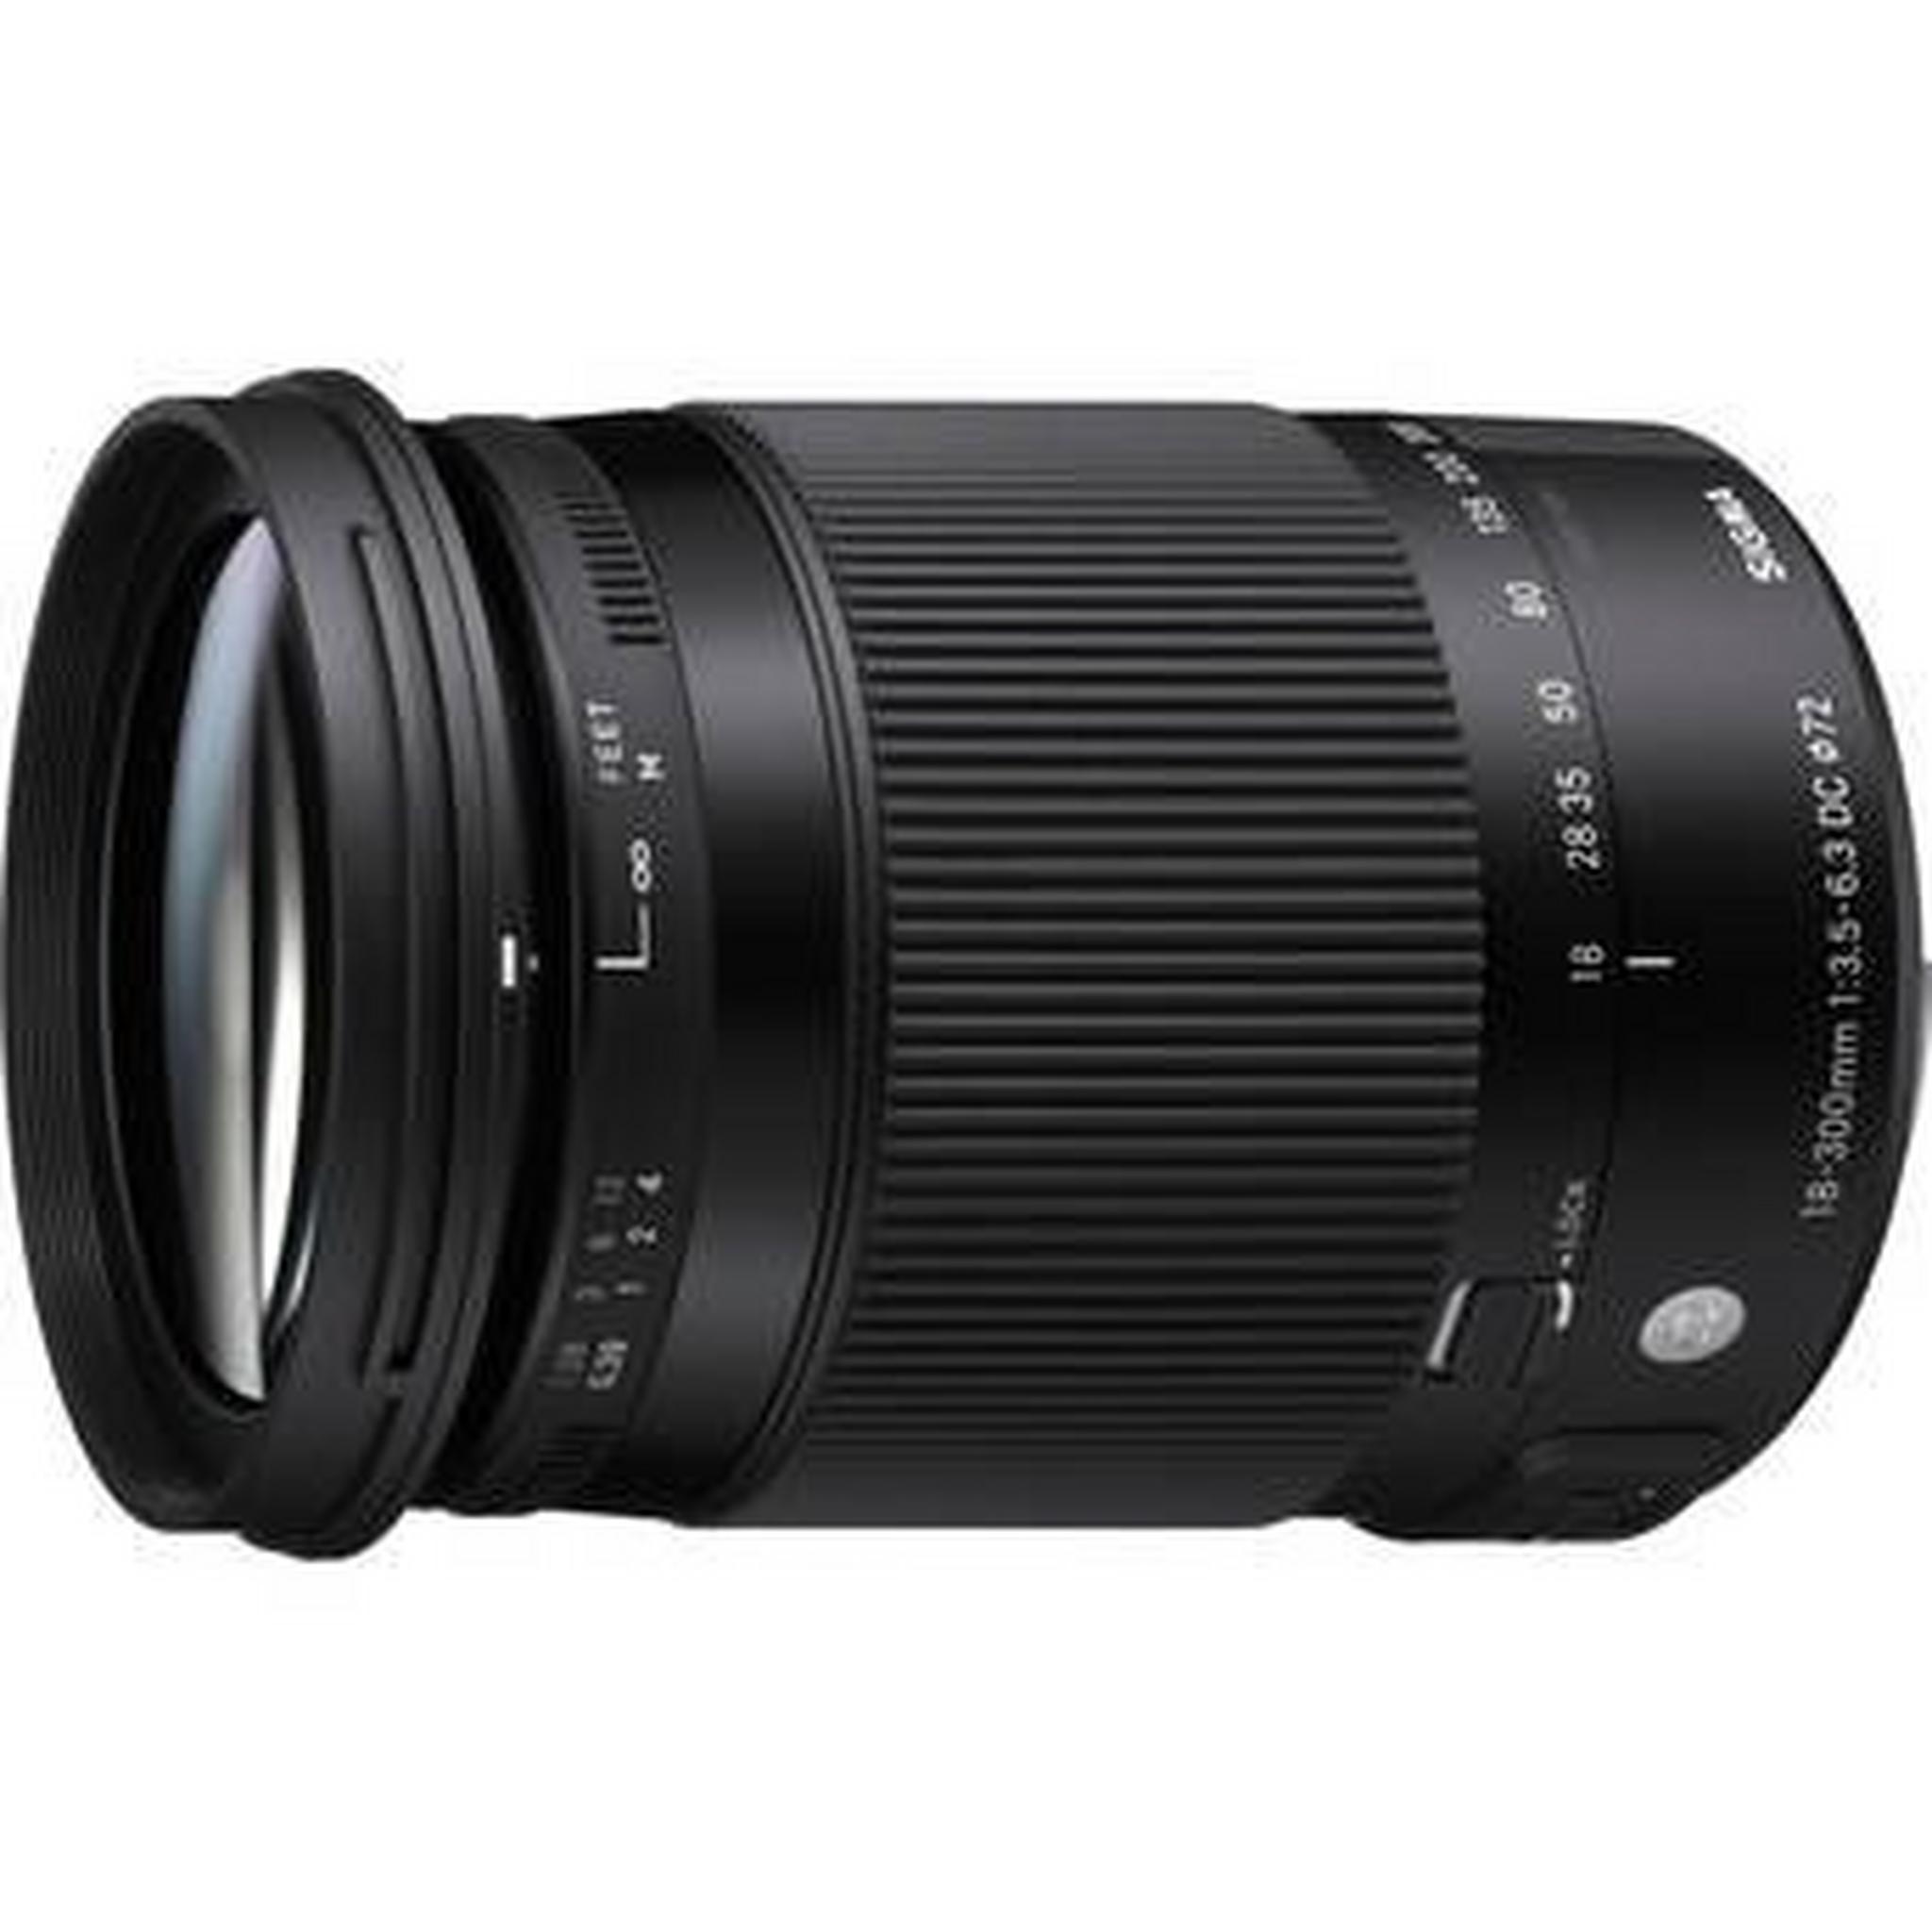 Sigma 18-300mm F3.5-6.3 DC Macro OS HSM Lens - Nikon Mount